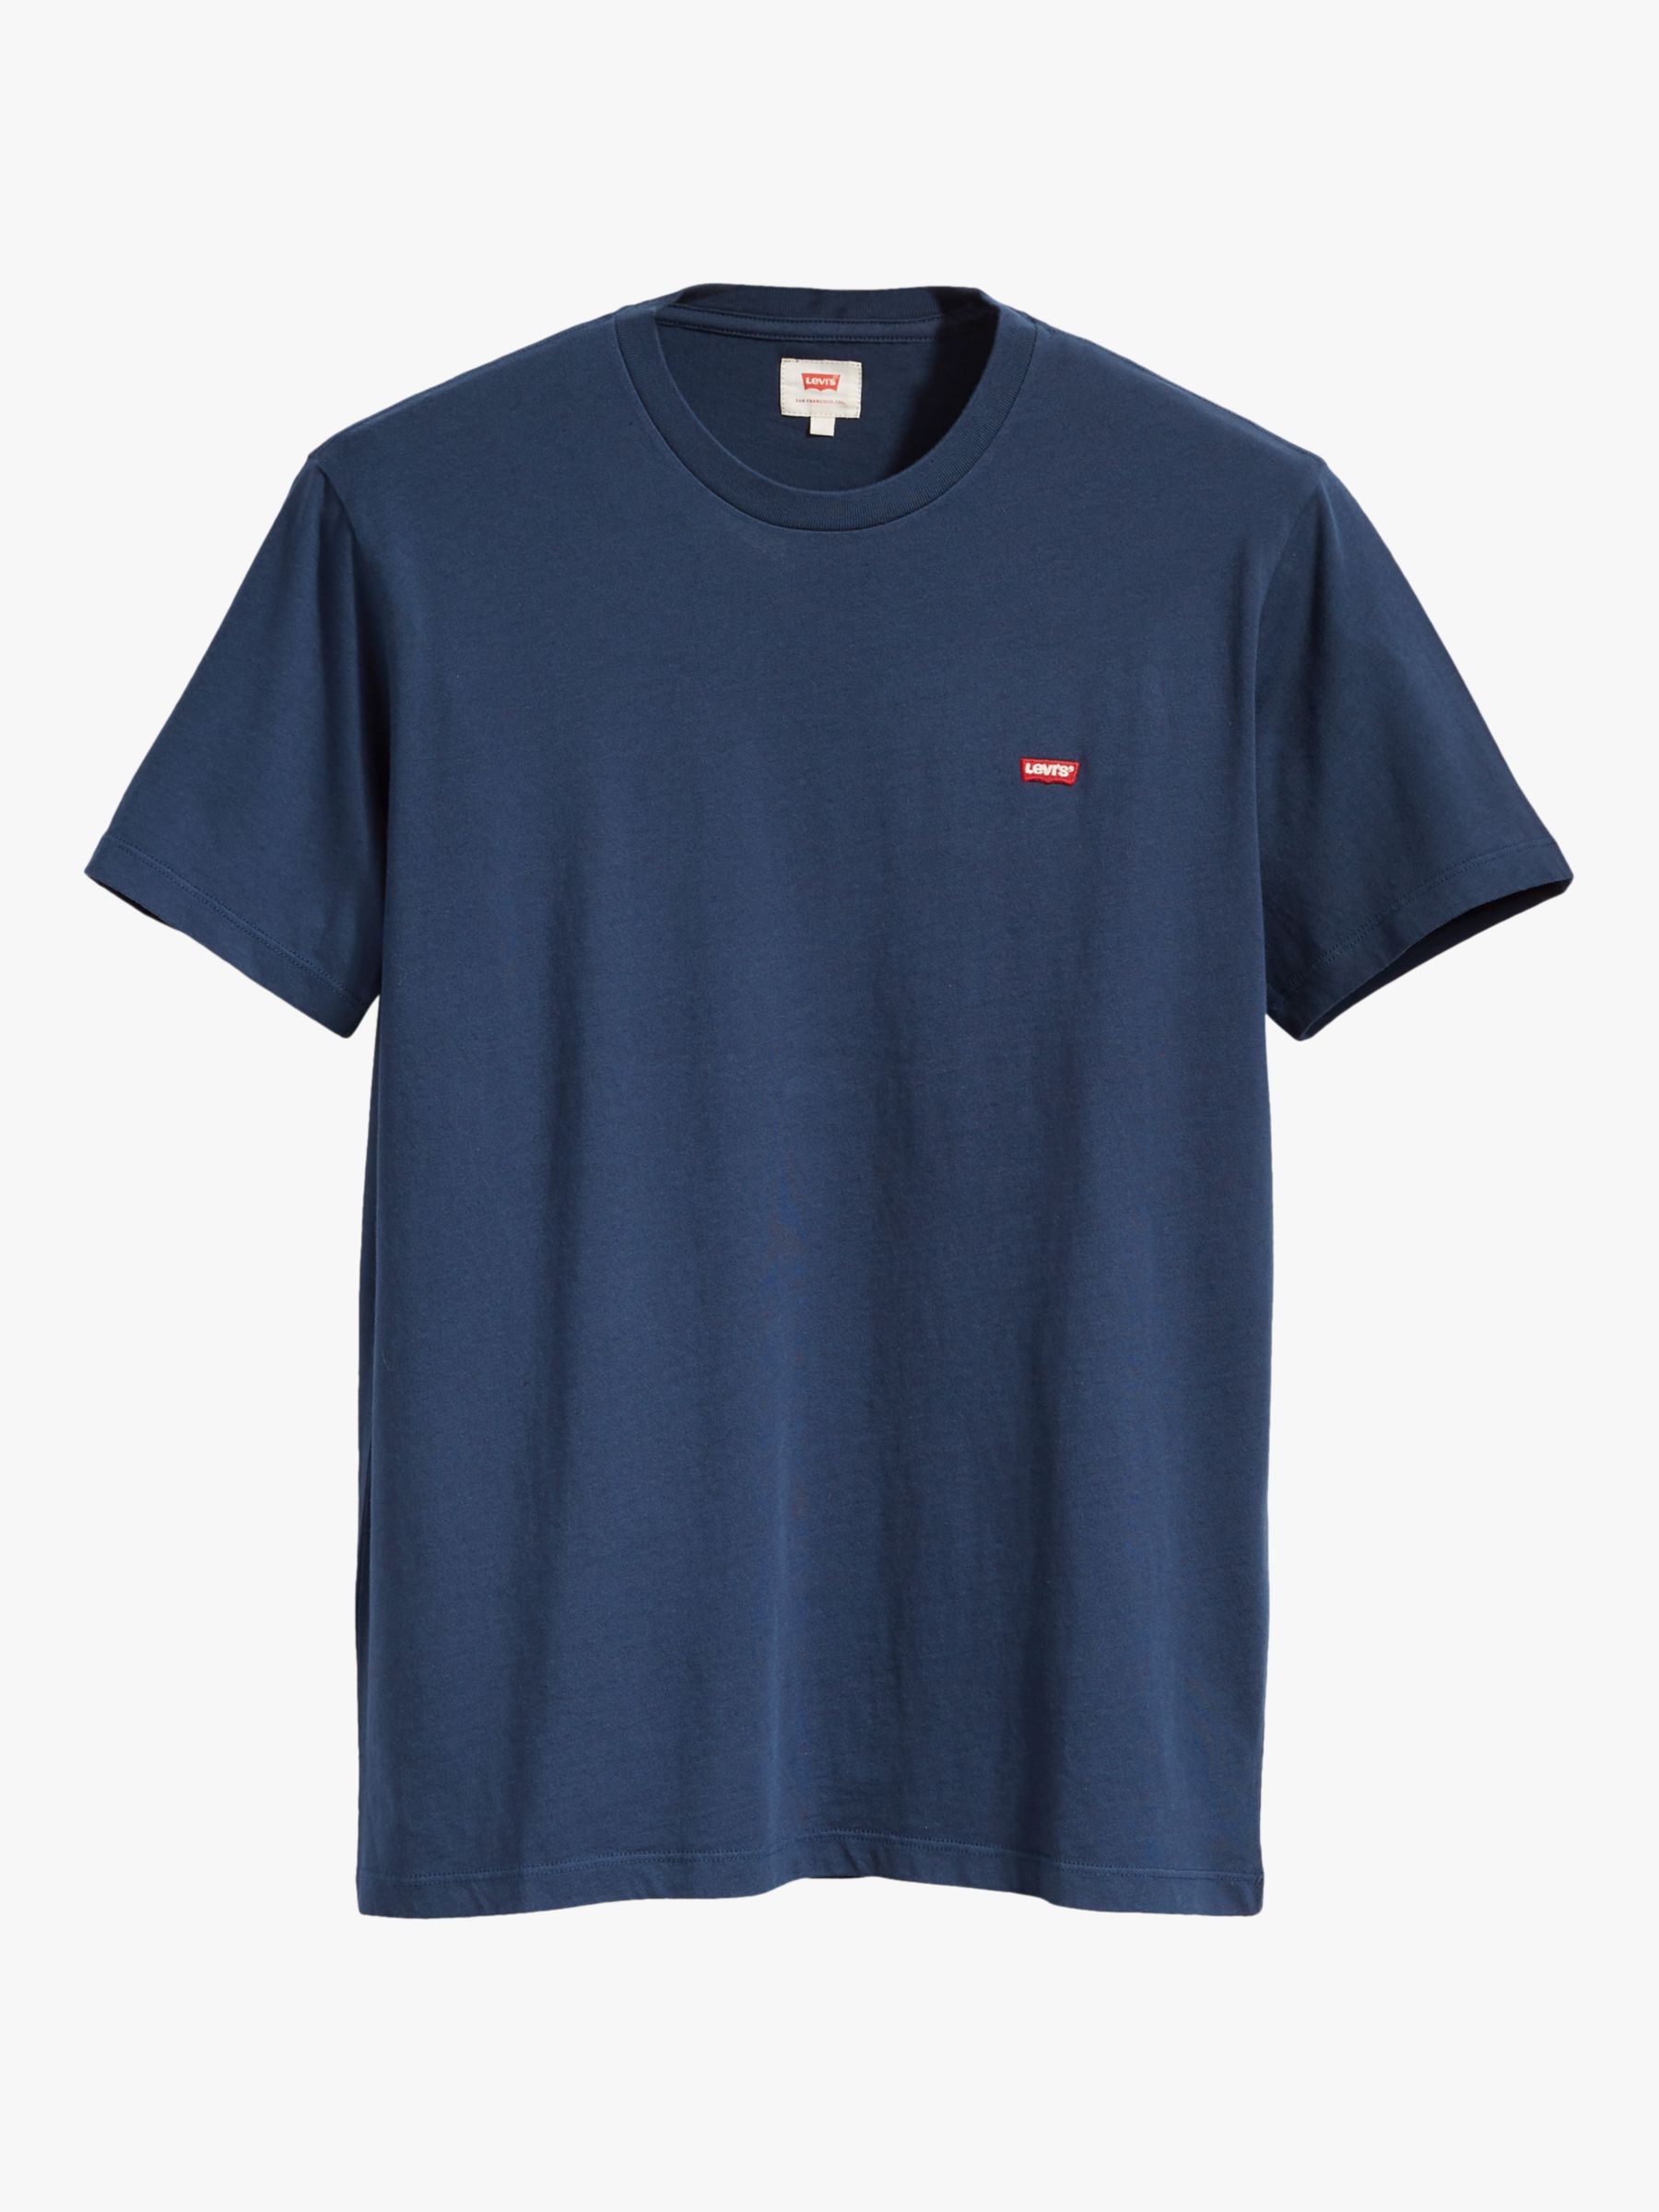 Levi's Original T-Shirt, Blue, S